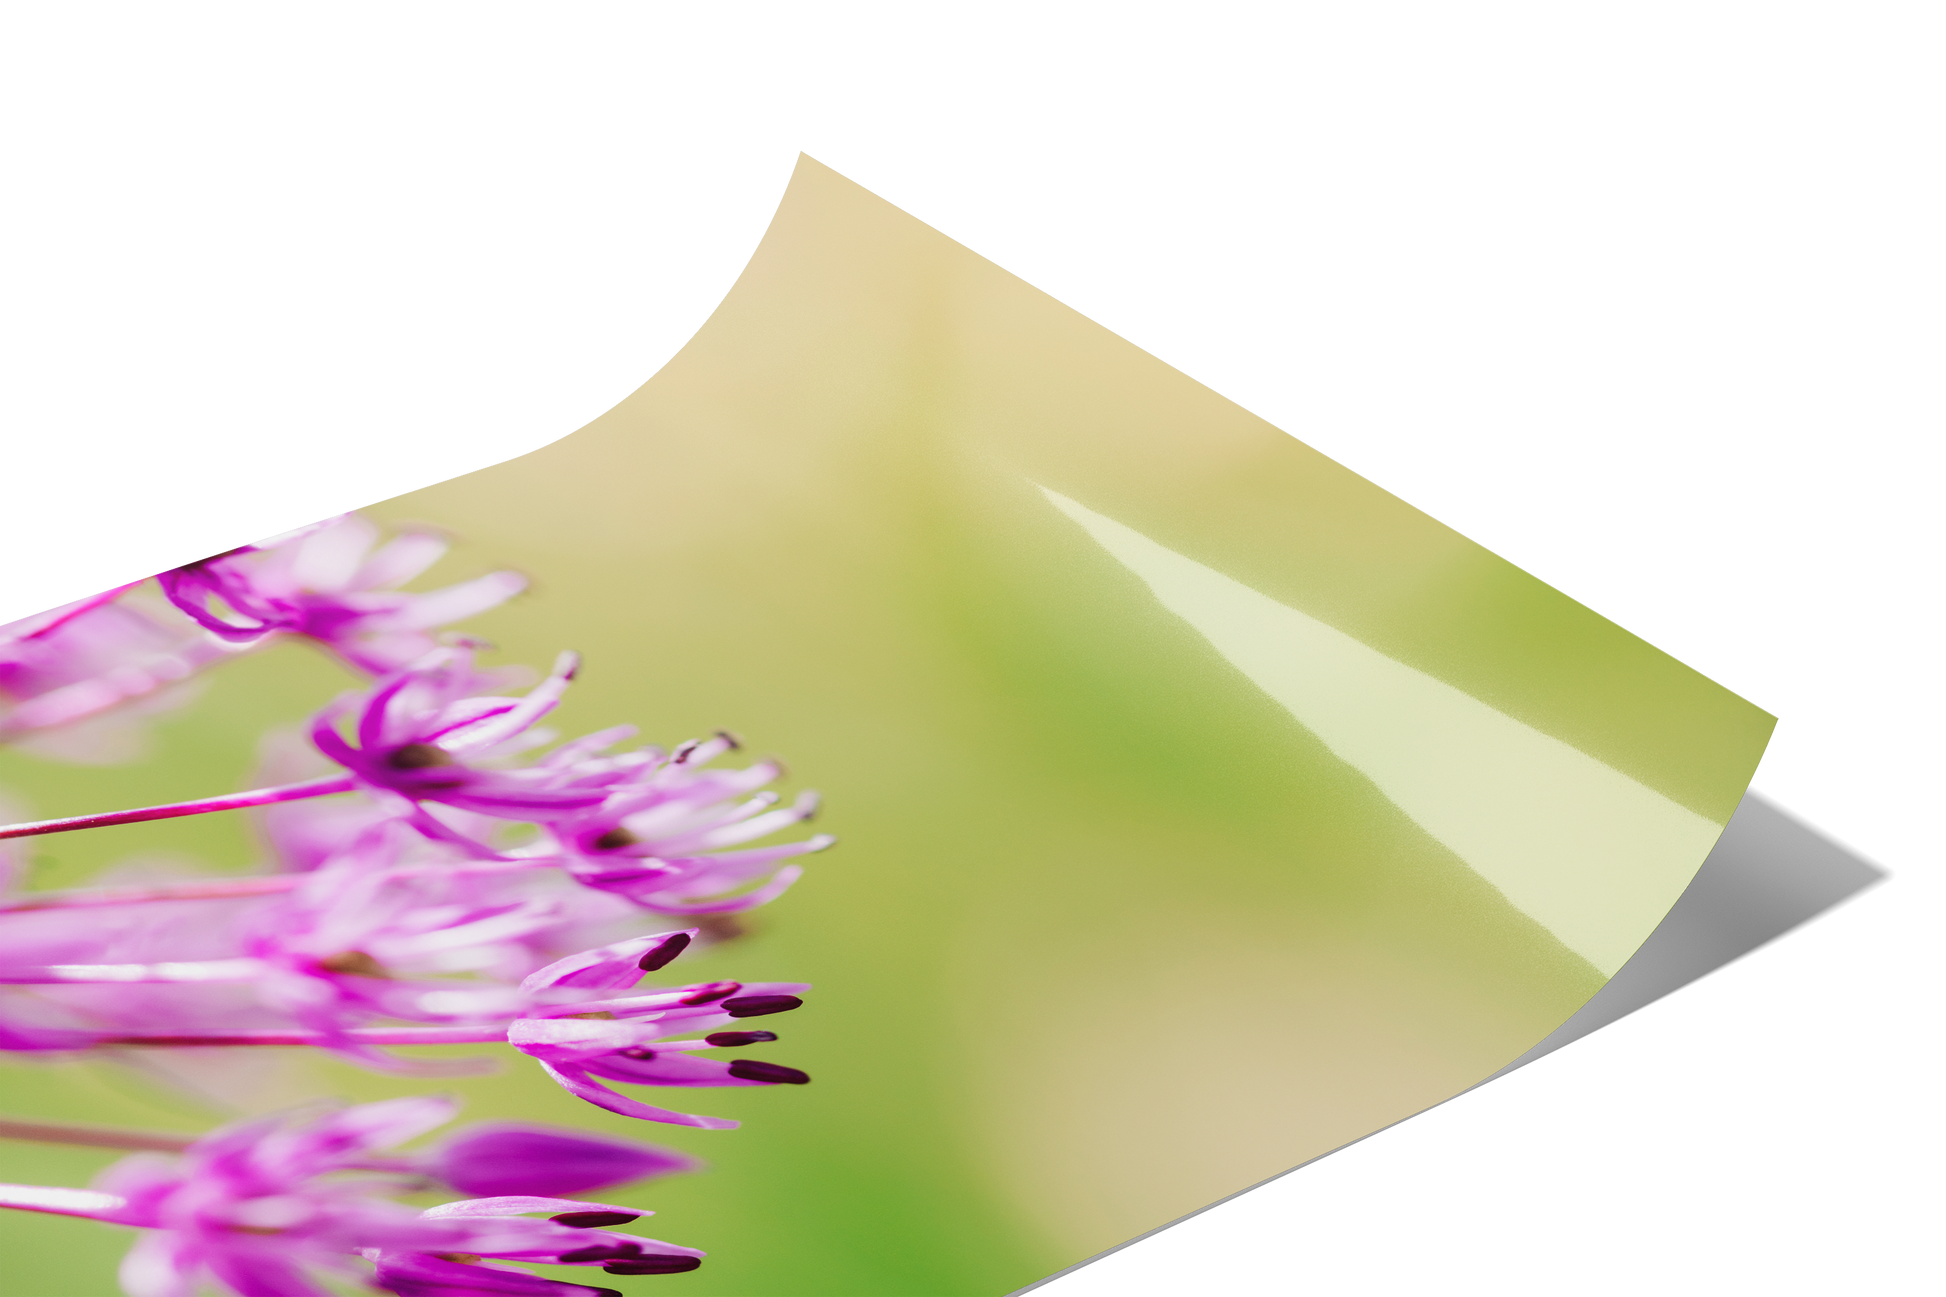 "Beauty in the Details" Allium Giganteum Flower Print